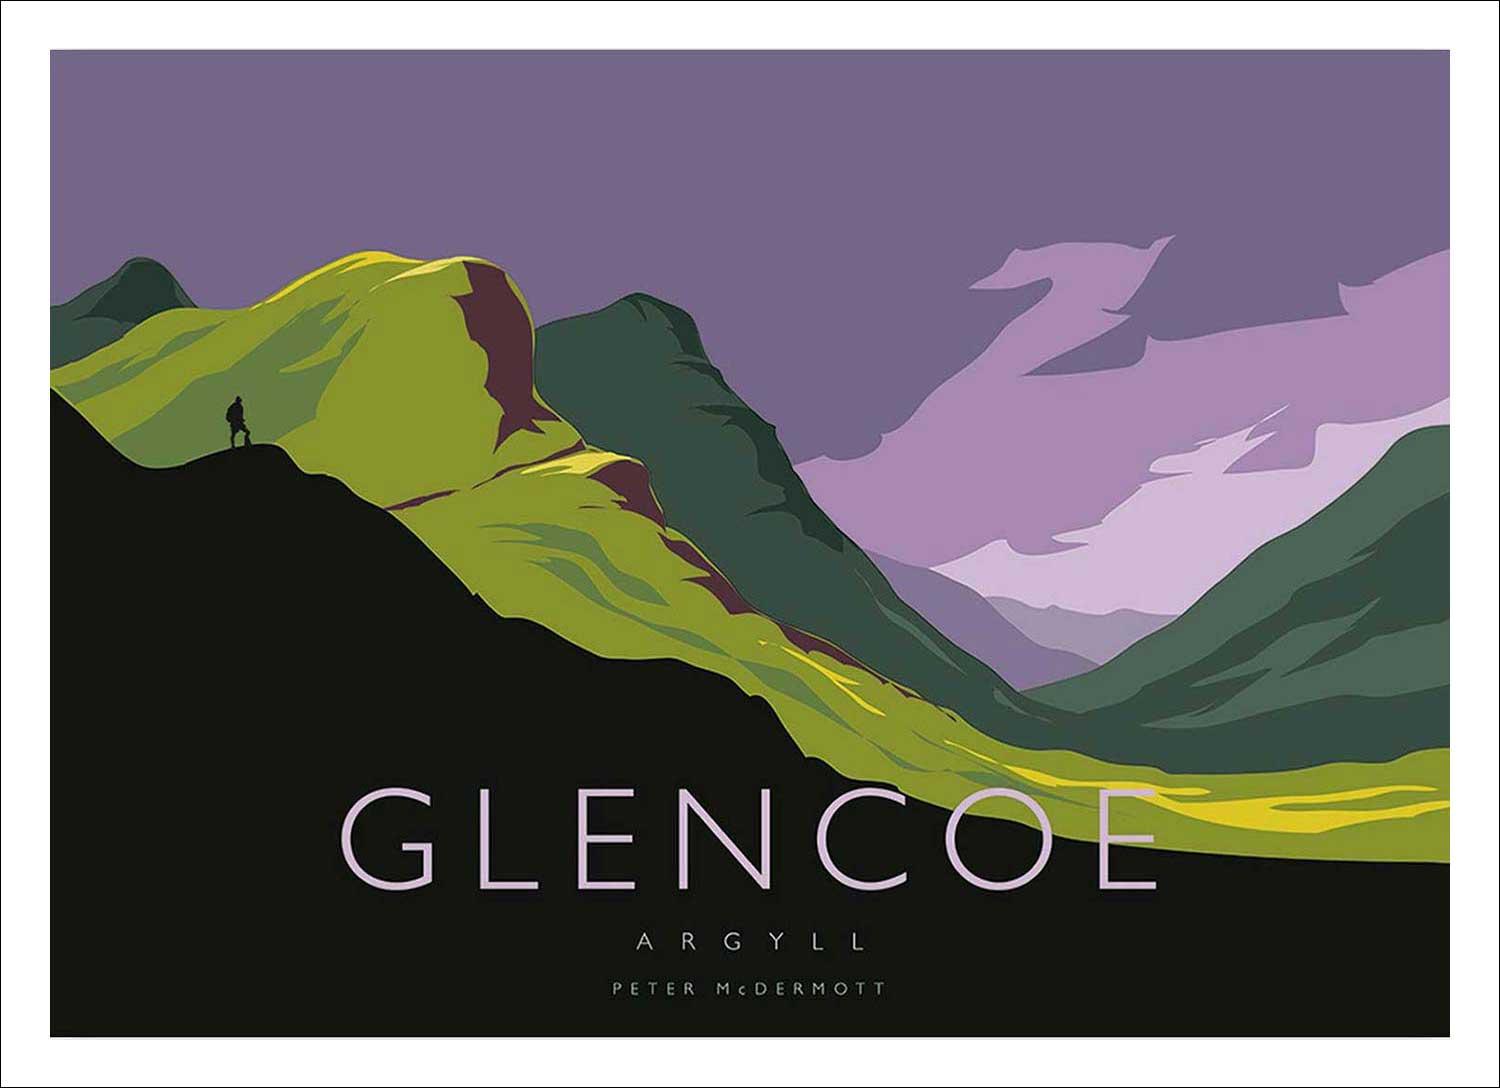 Glencoe Art Print from an original illustration by artist Peter McDermott